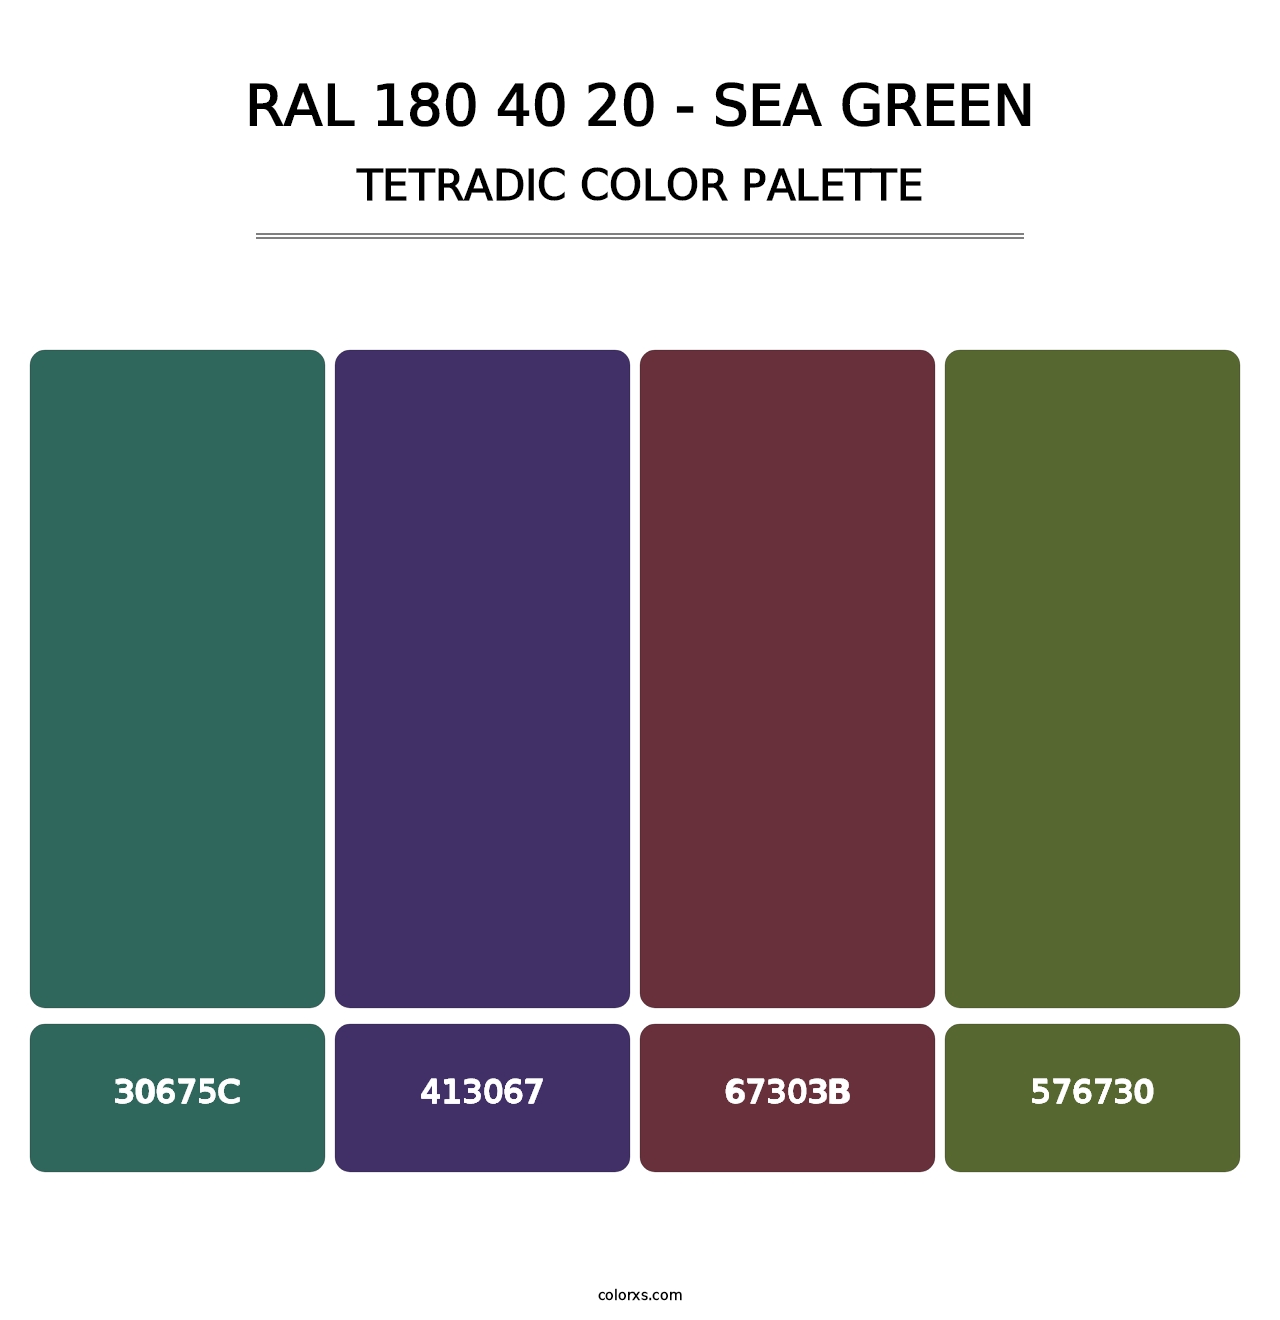 RAL 180 40 20 - Sea Green - Tetradic Color Palette